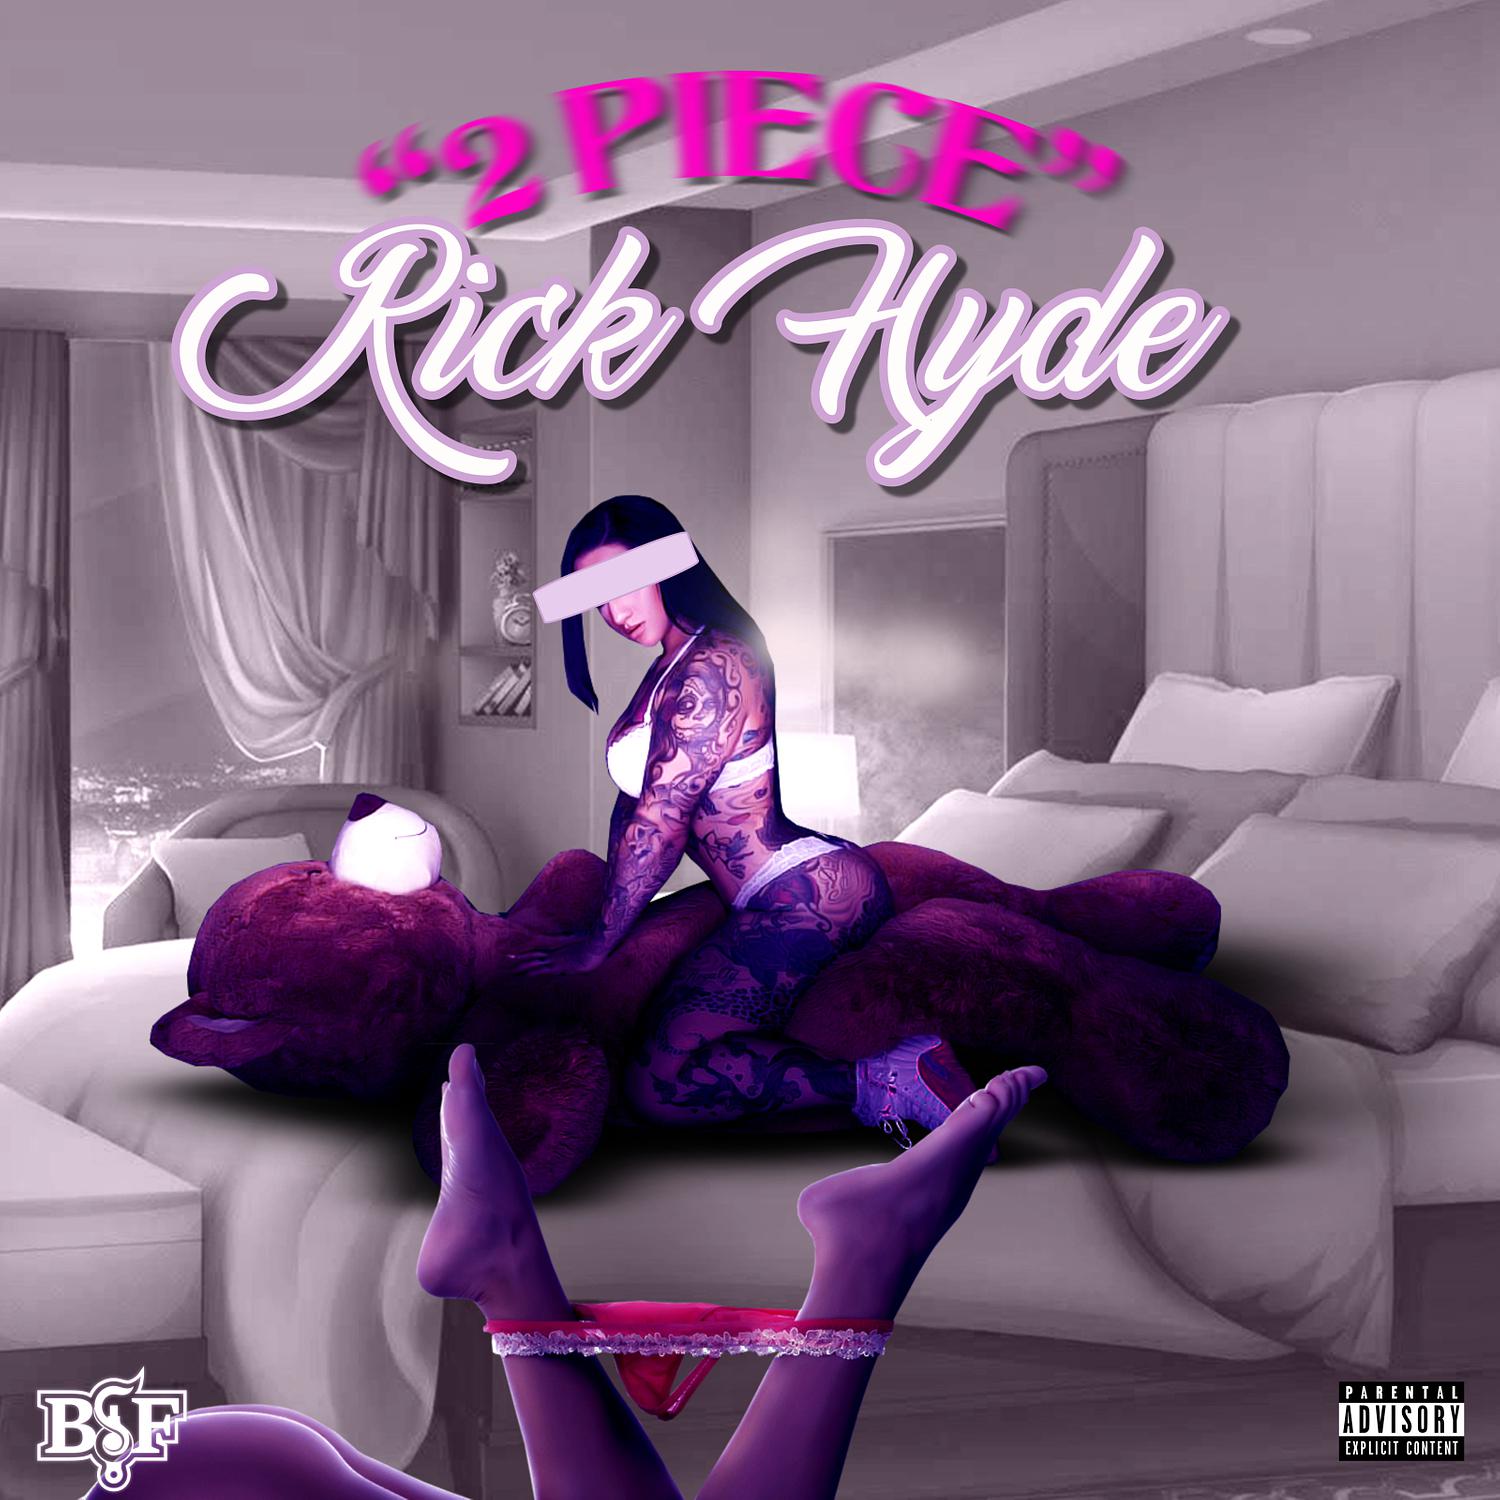 Rick Hyde - “2 Piece”